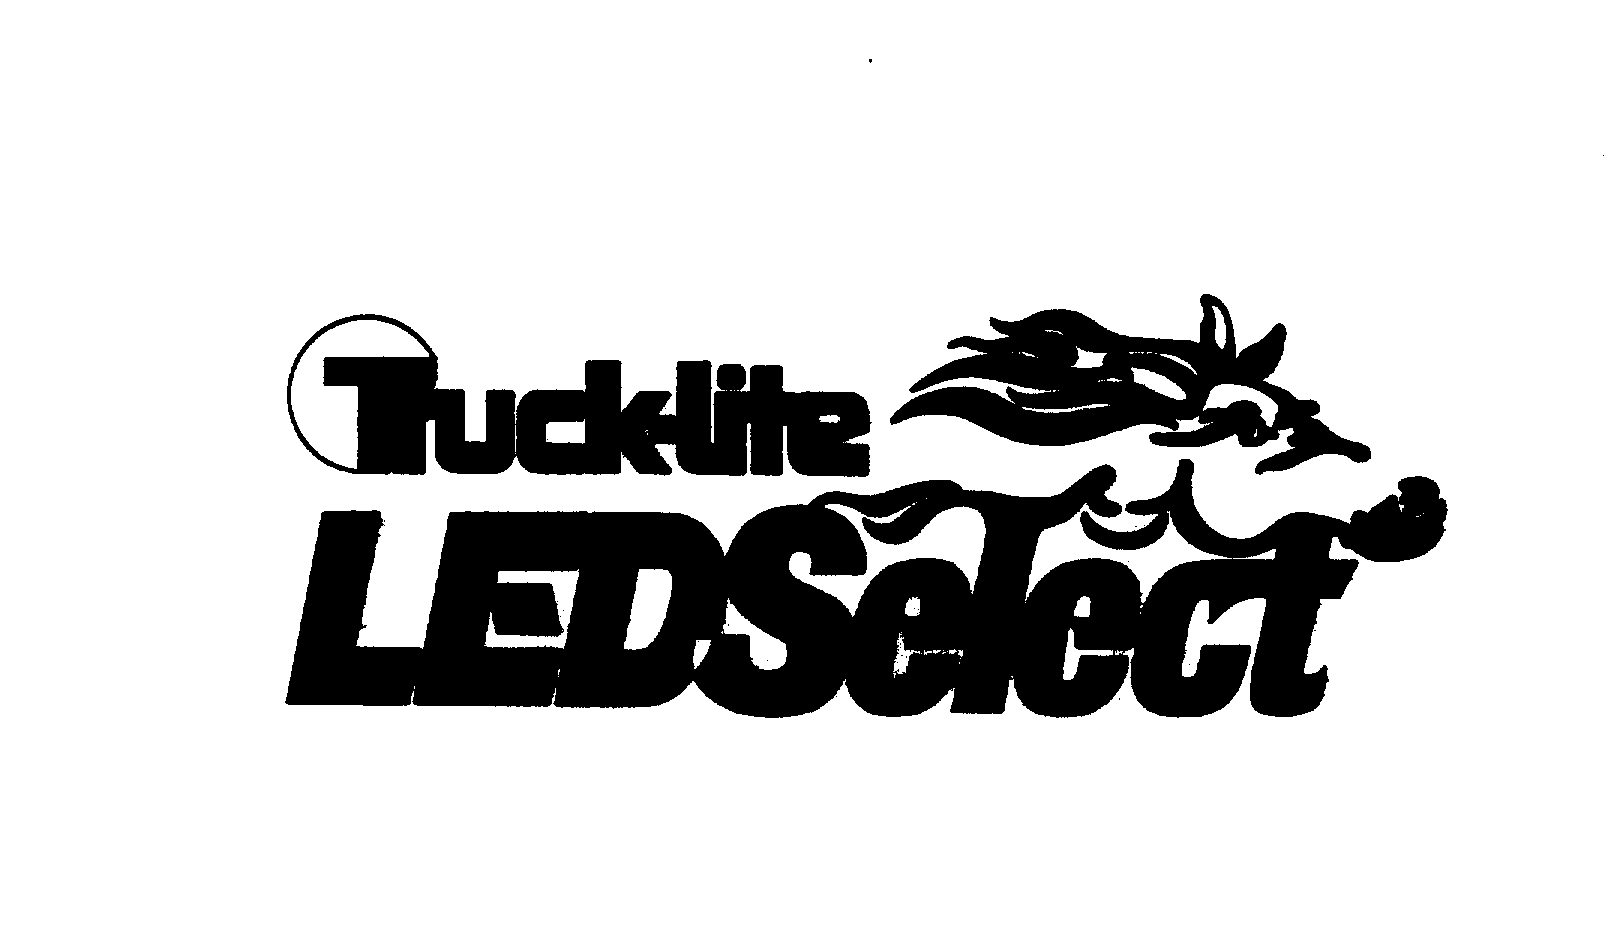  TRUCK-LITE LEDSELECT